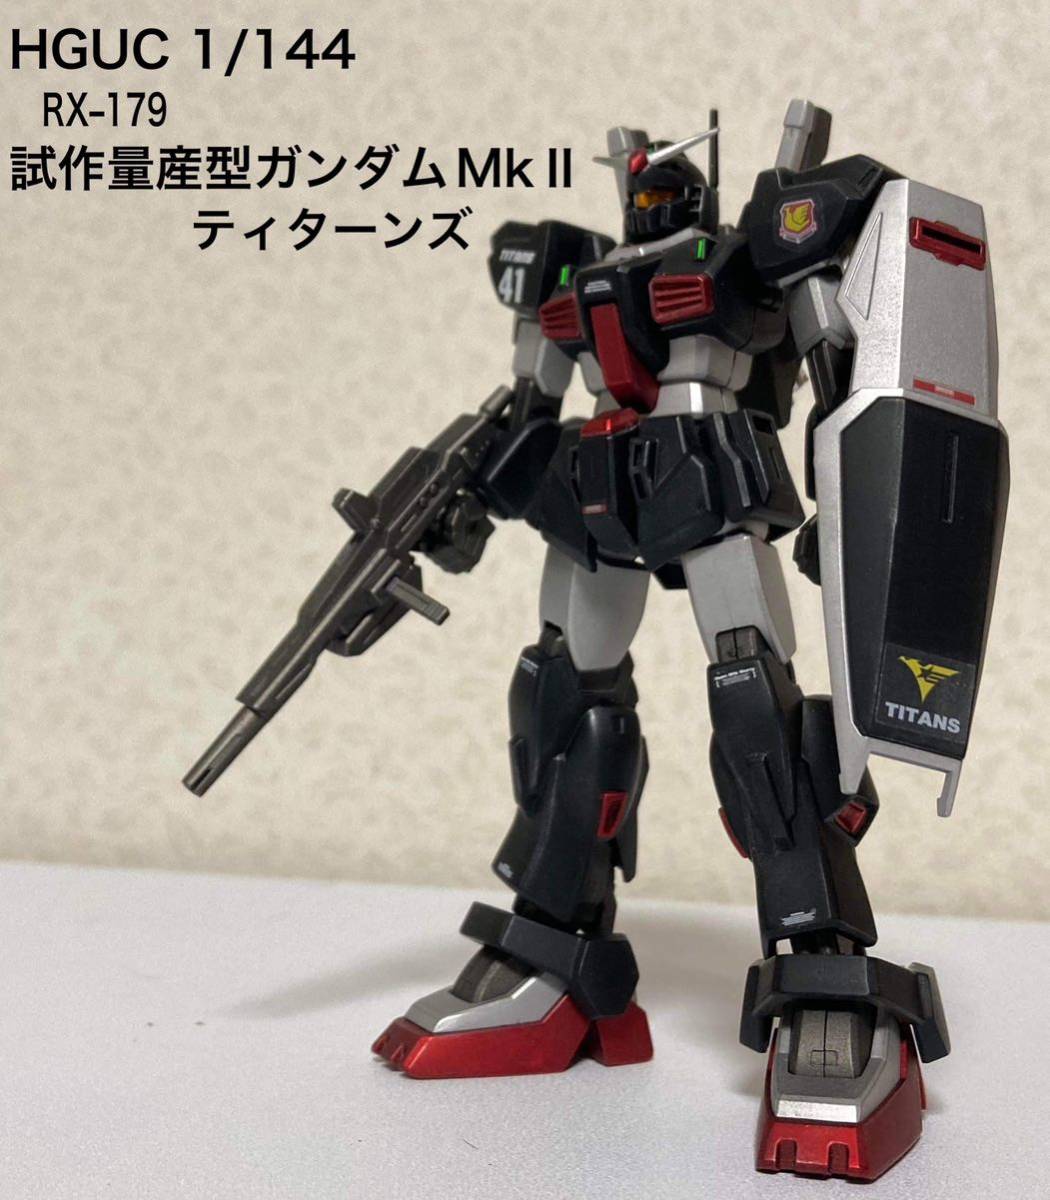 HGUC 1/144 RX-179 النموذج الأولي Gundam MkⅡ منتج نهائي مطلي بالكامل, شخصية, جاندام, منتج منتهي